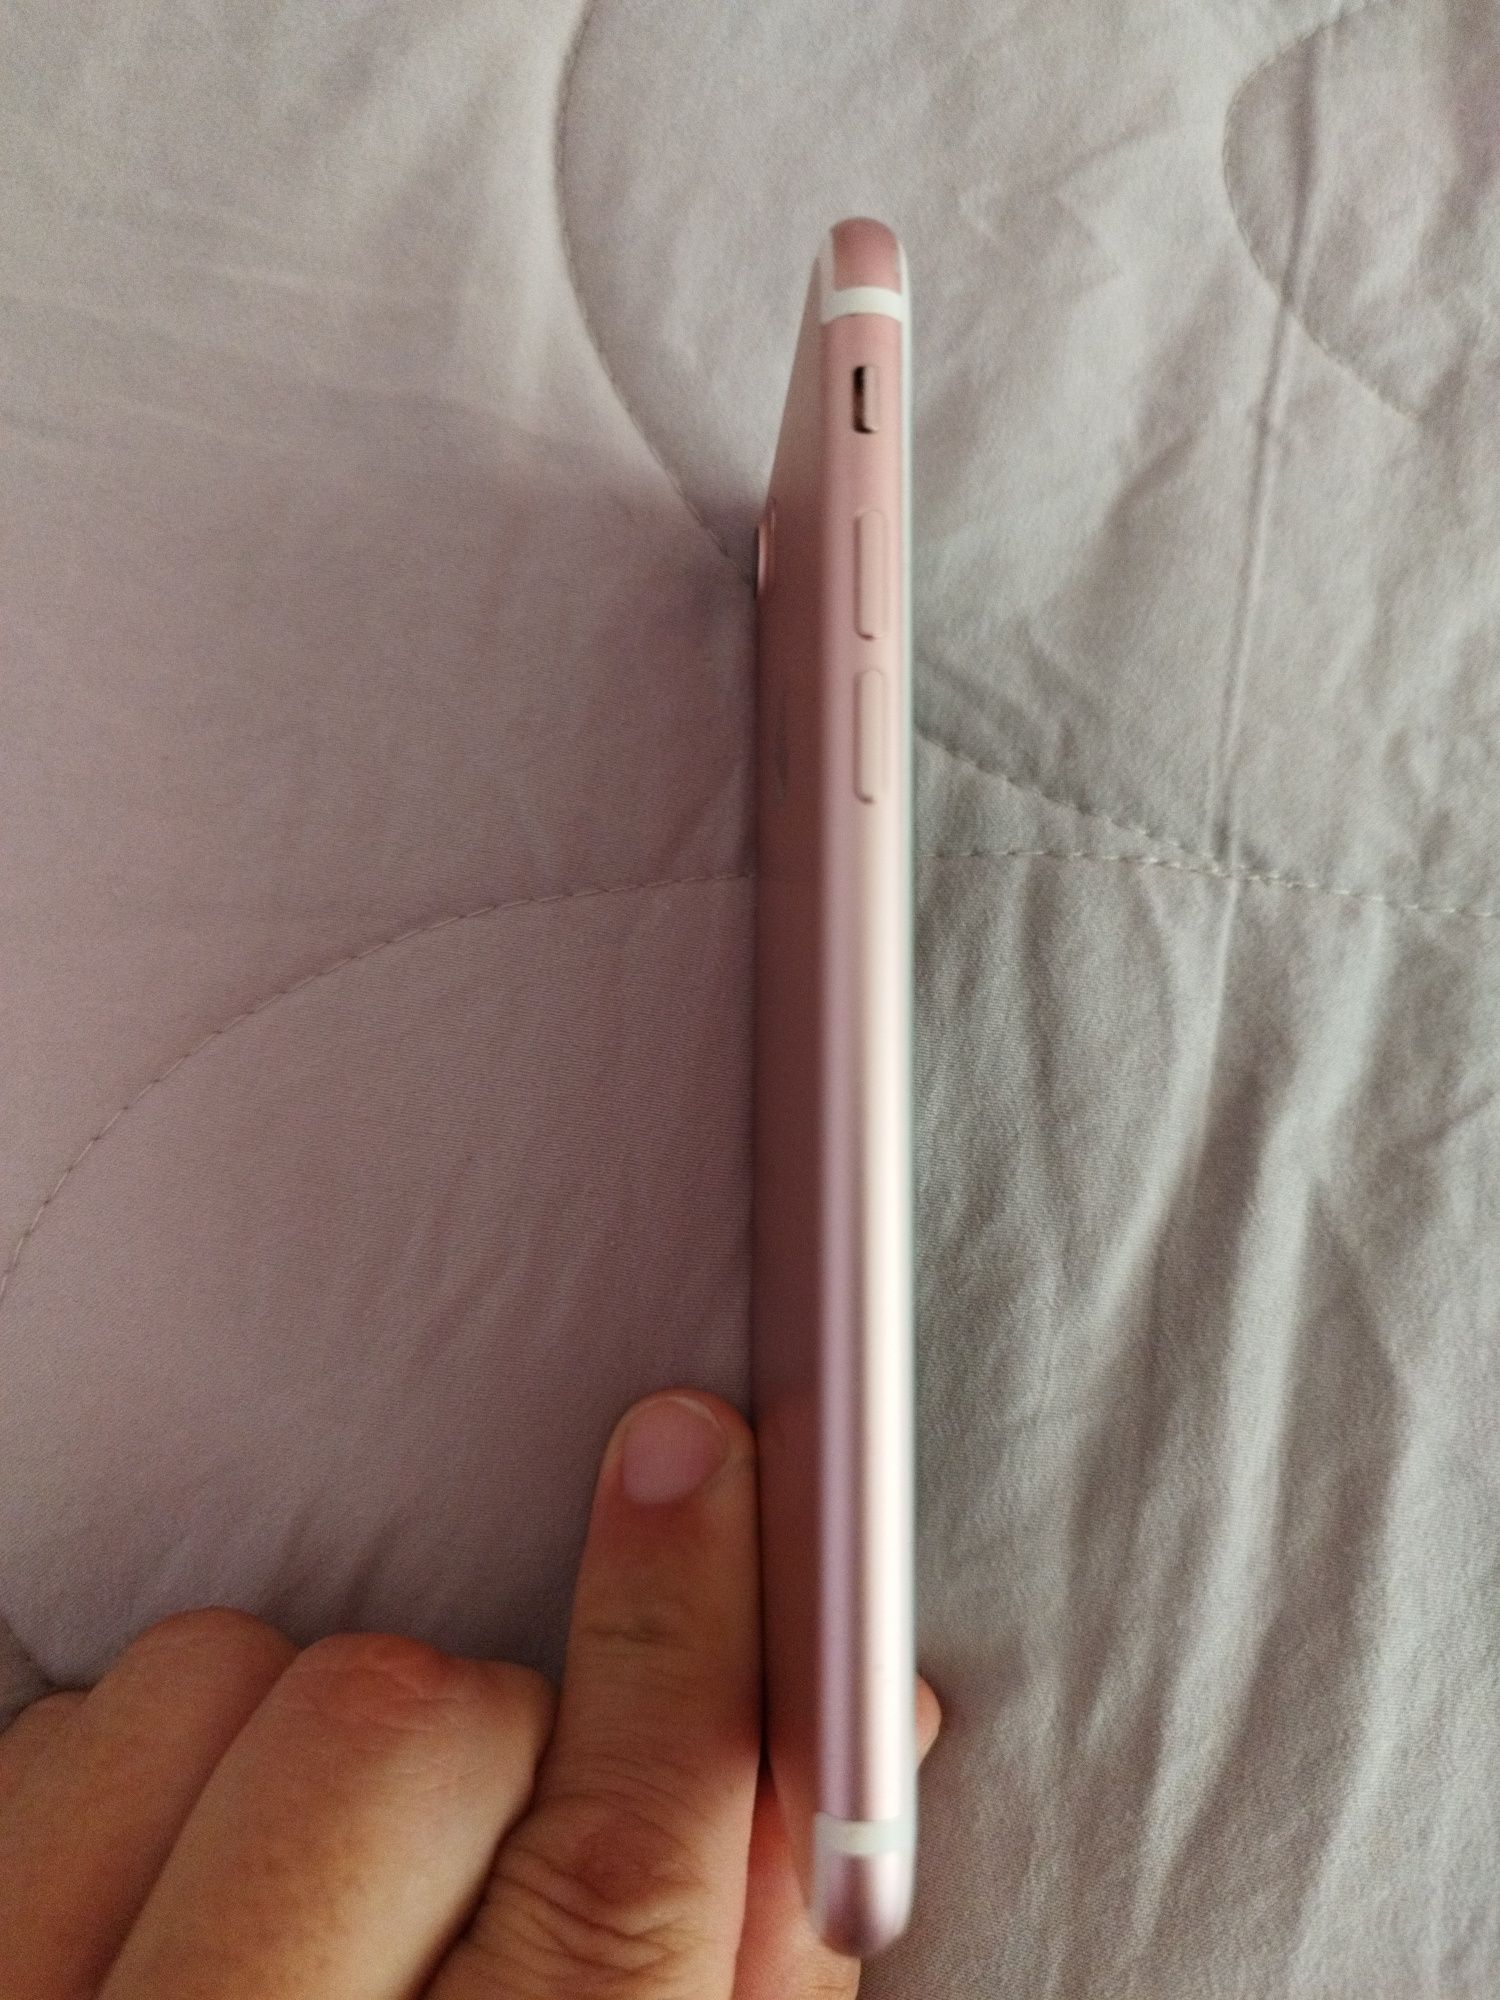 Iphone 7 rose gold